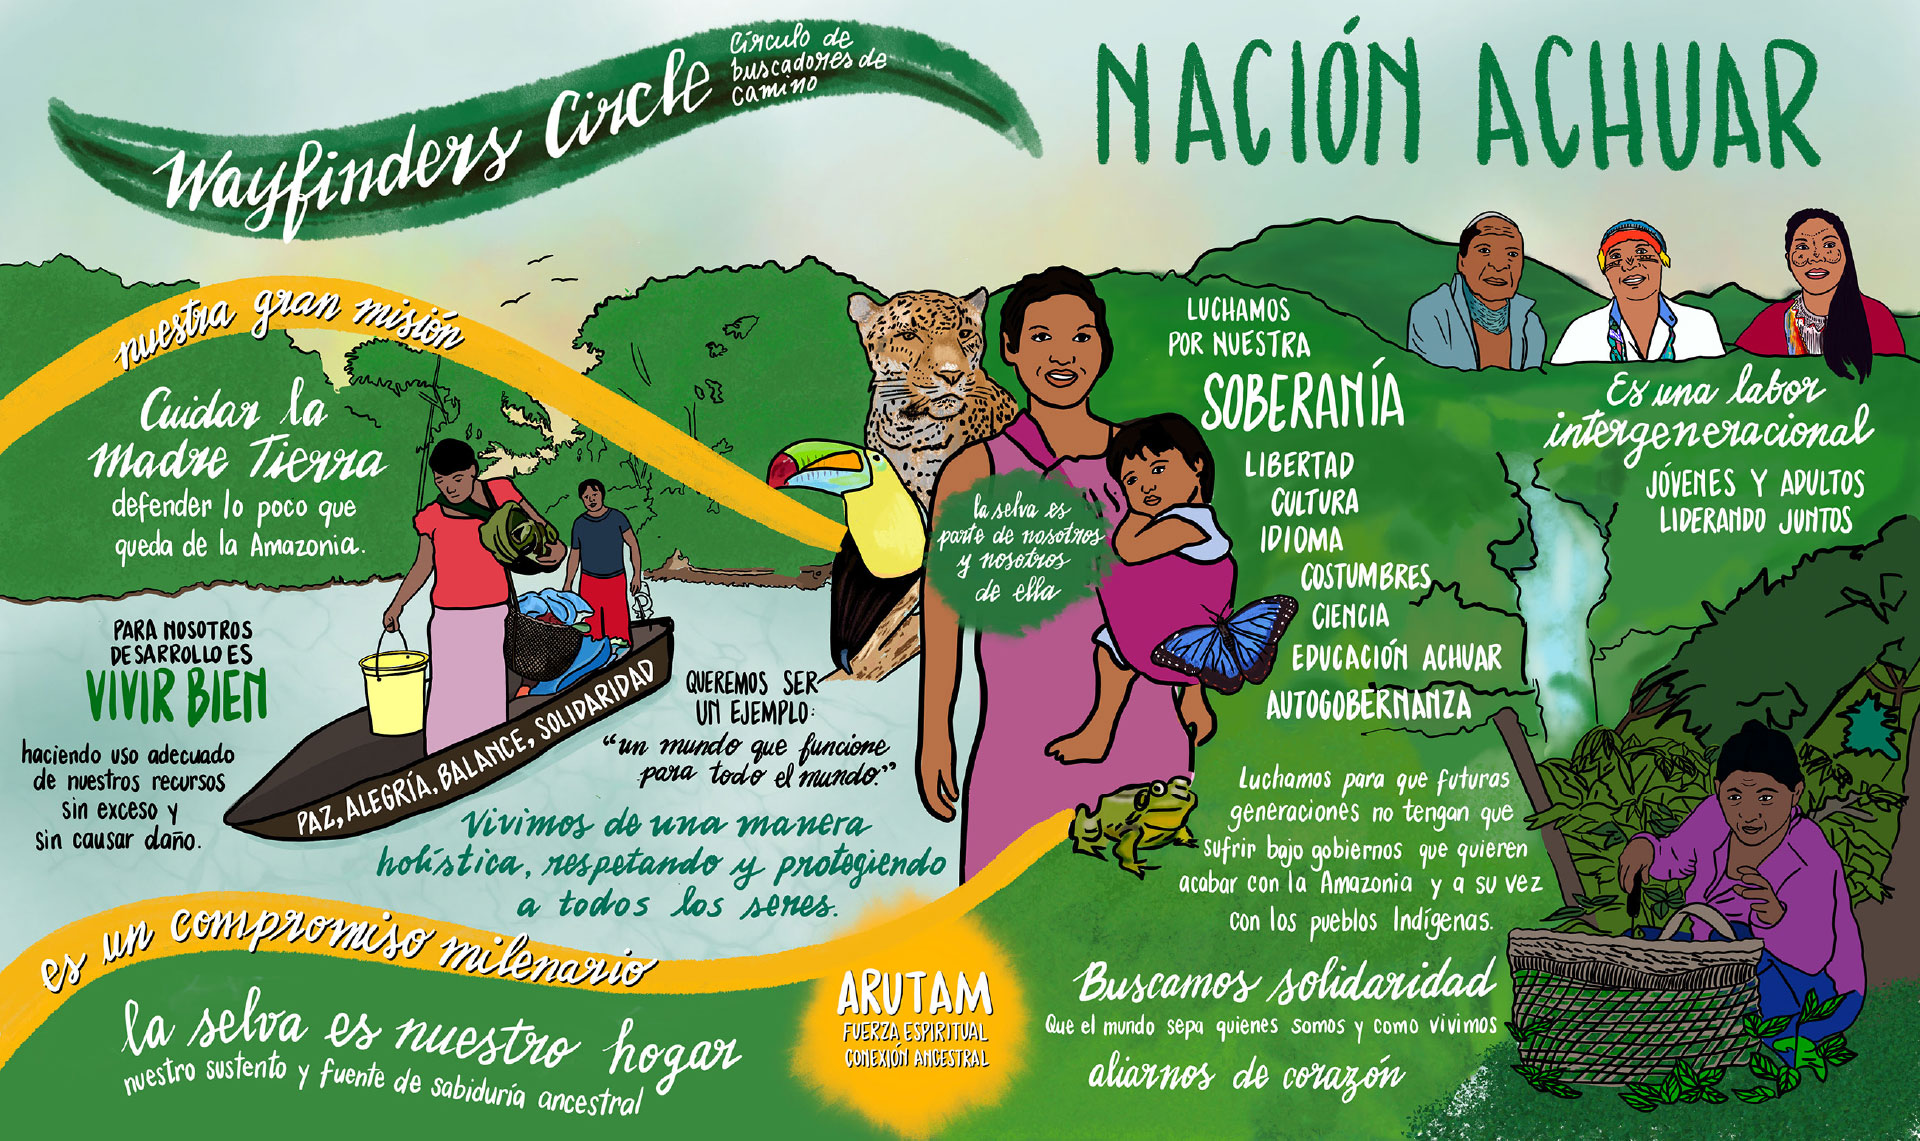 Achuar Nation illustration